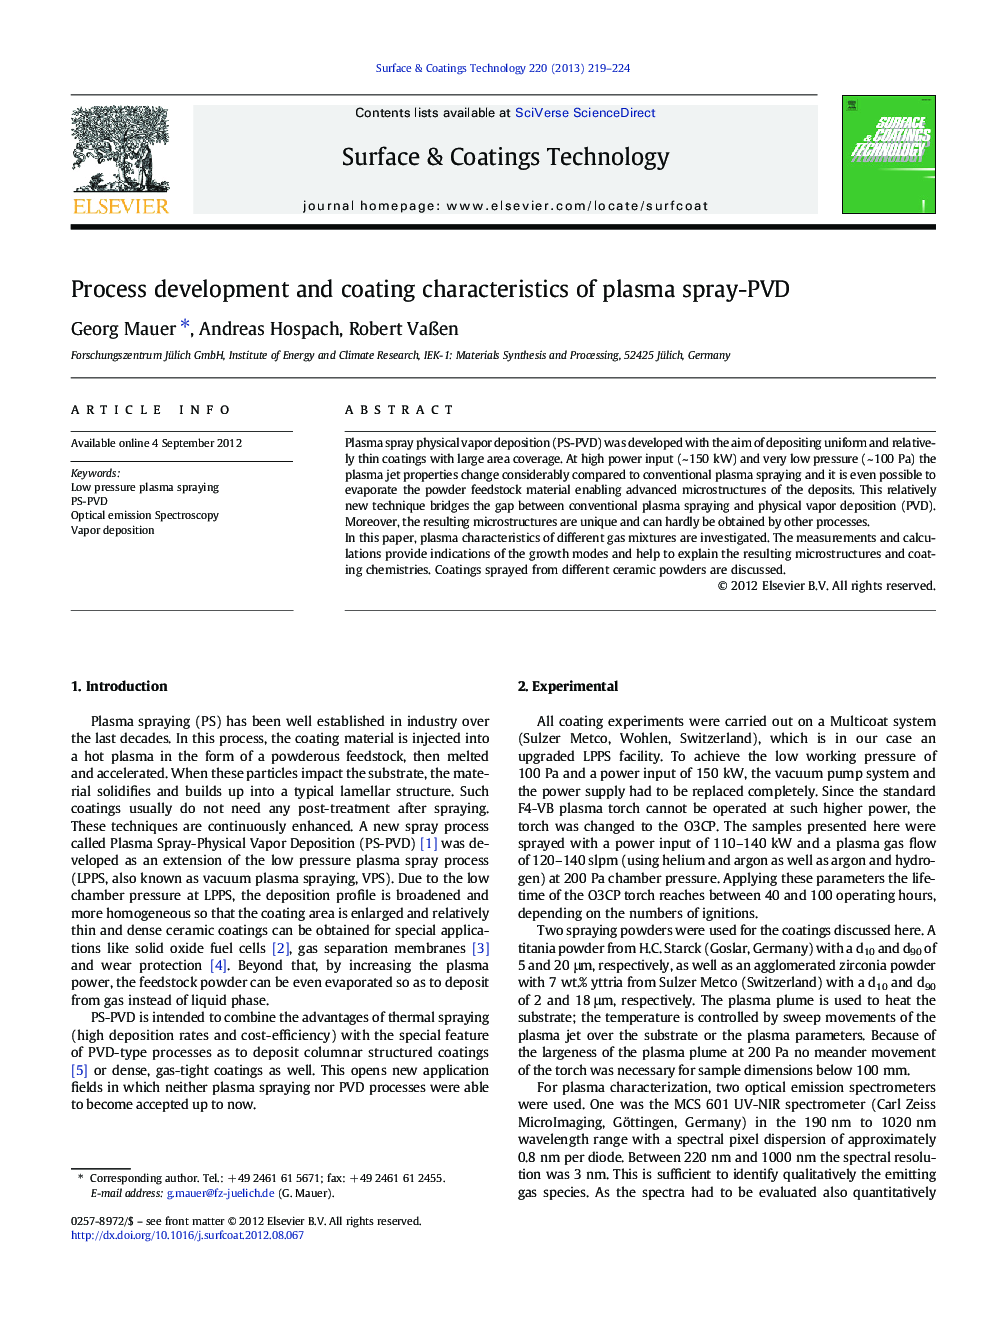 Process development and coating characteristics of plasma spray-PVD